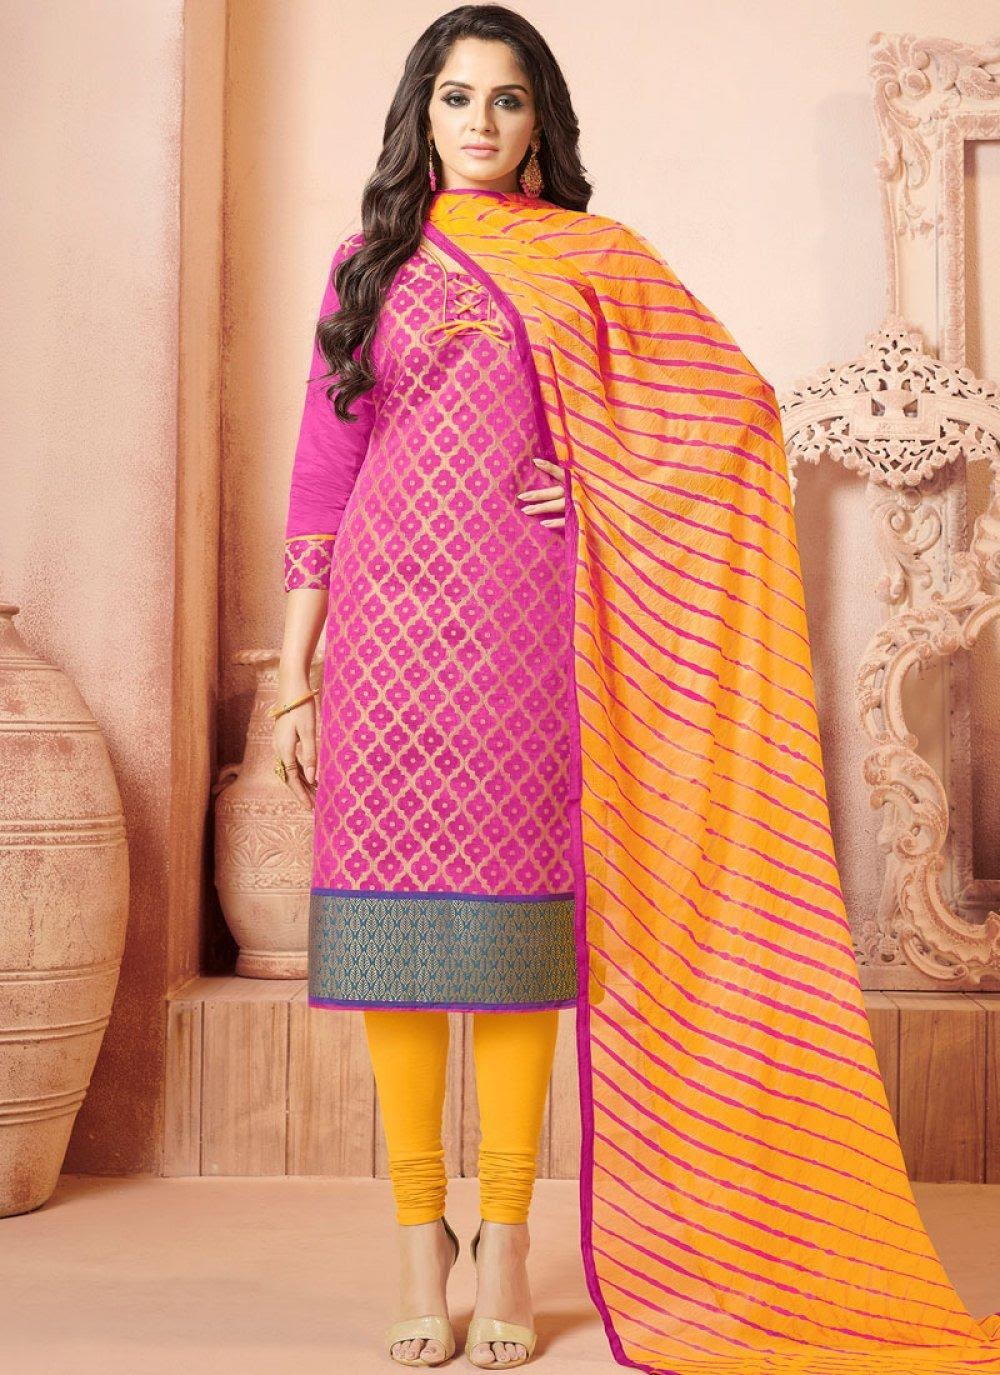 Why Churidar Salwar Suits are Popular Among Indian Women